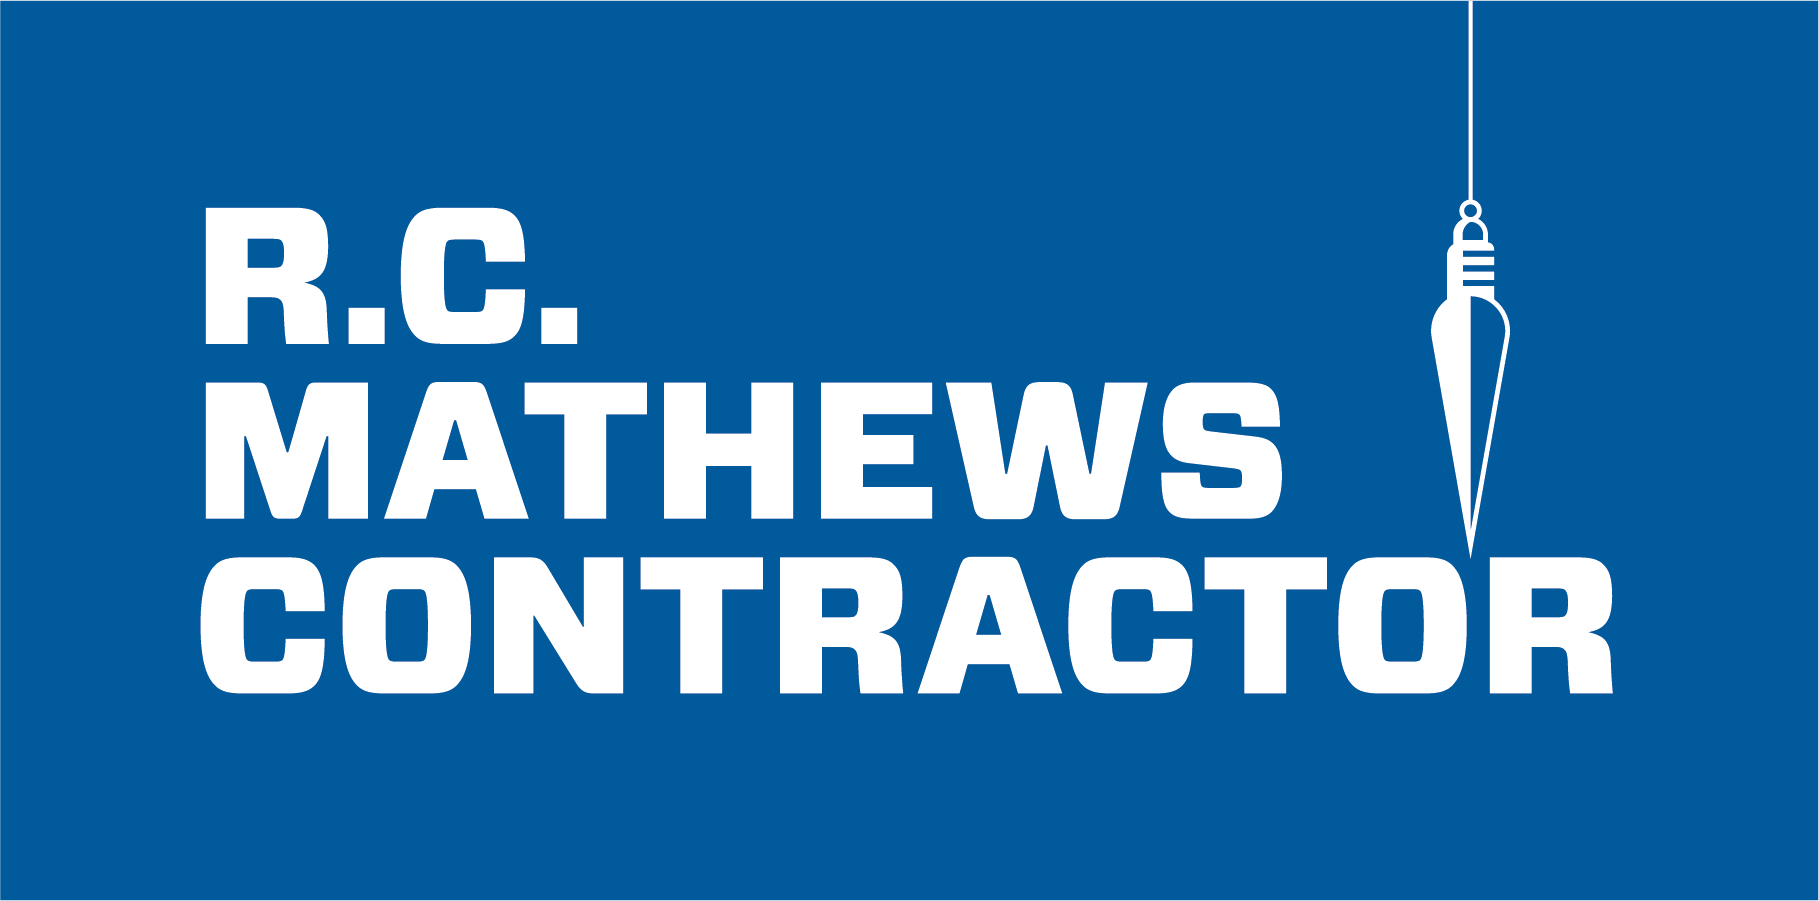 R.C. Mathews Contractor logo